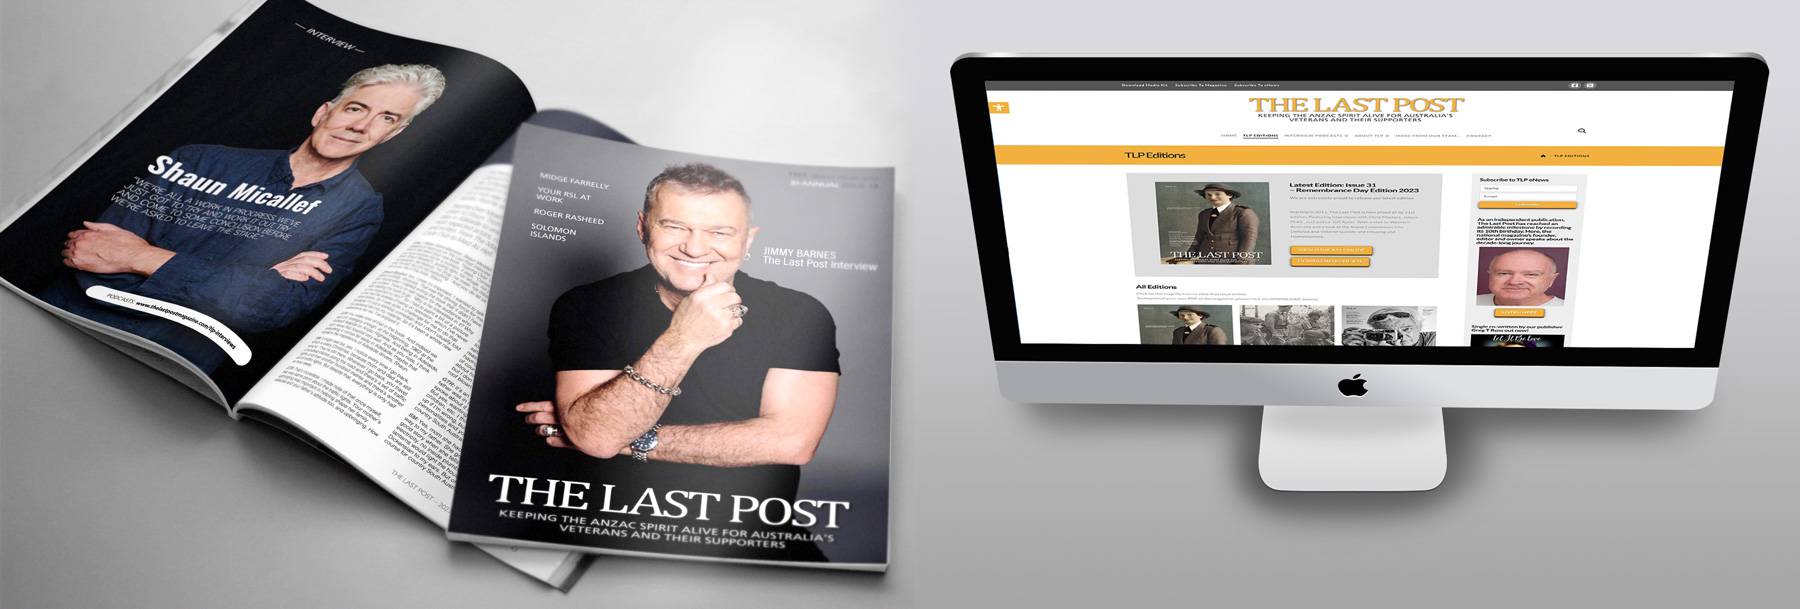 The Last Post Magazine and Website by Kirstie Wyatt, Wyatt Creative